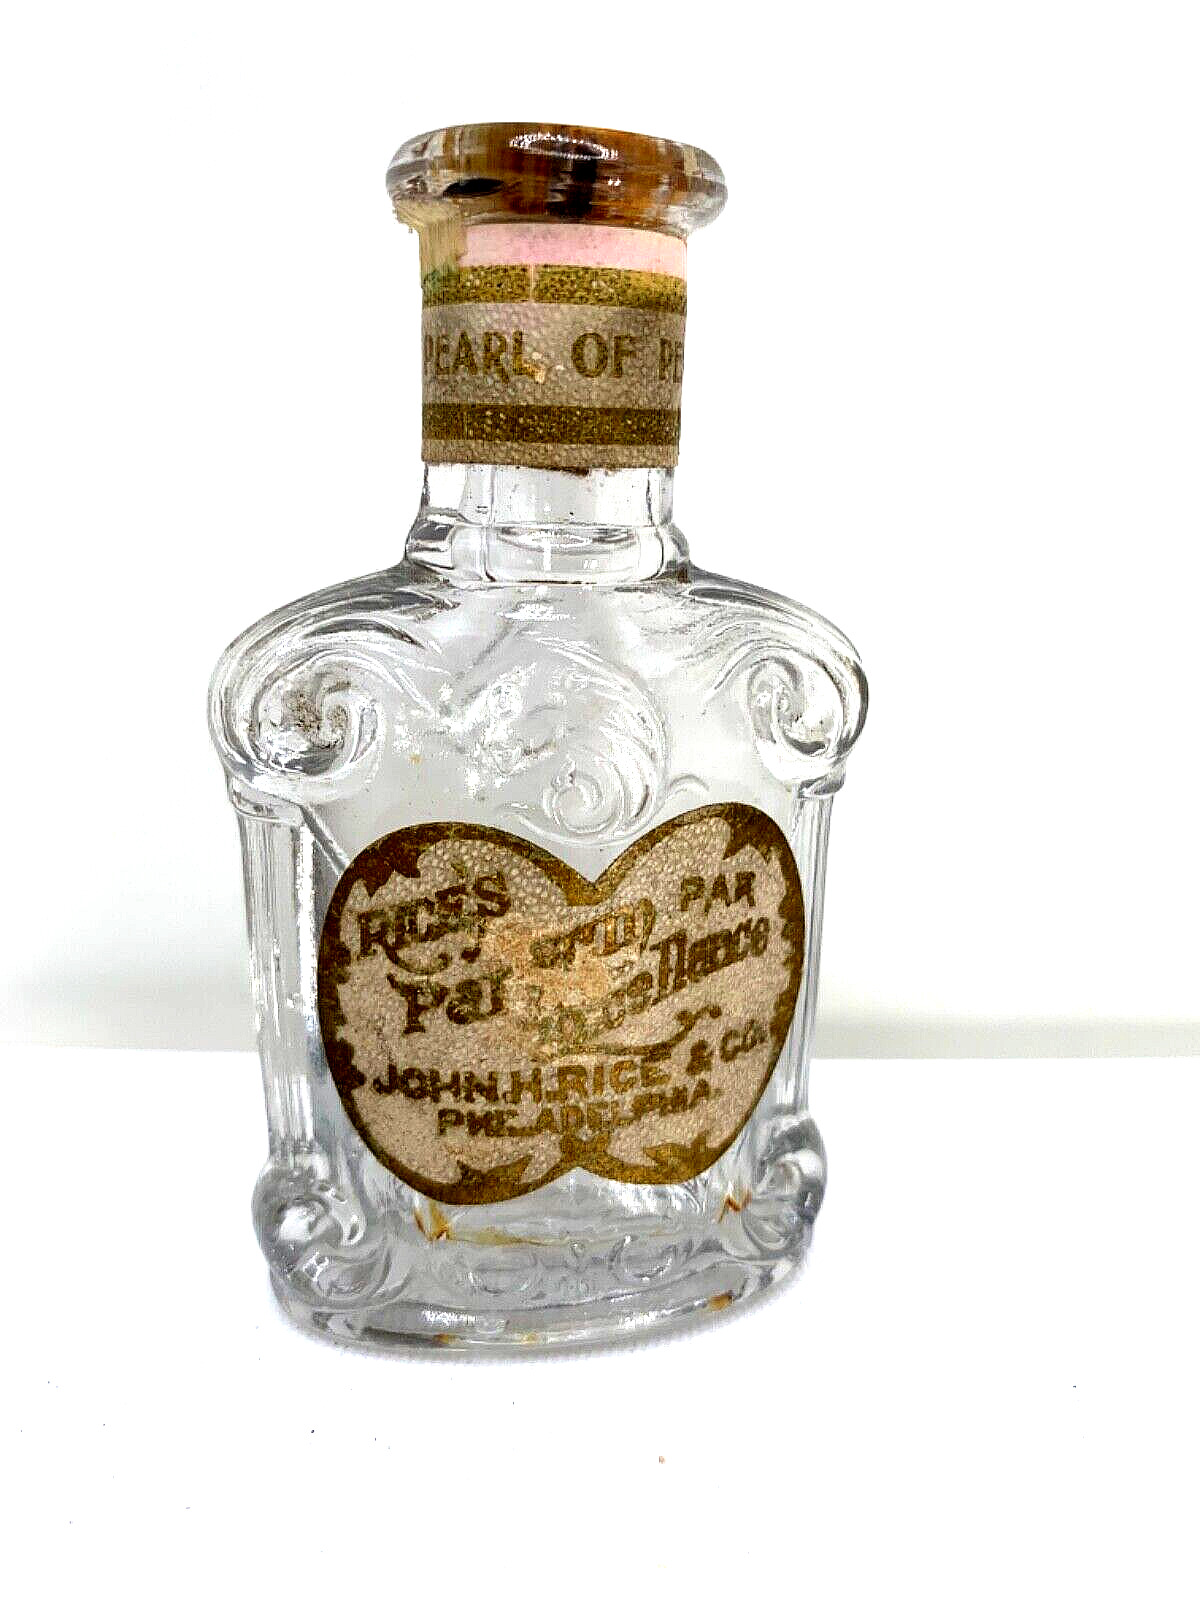 144 years old Antique perfume bottle.  Pearl of Pekin by John Rice & Co.  1880.